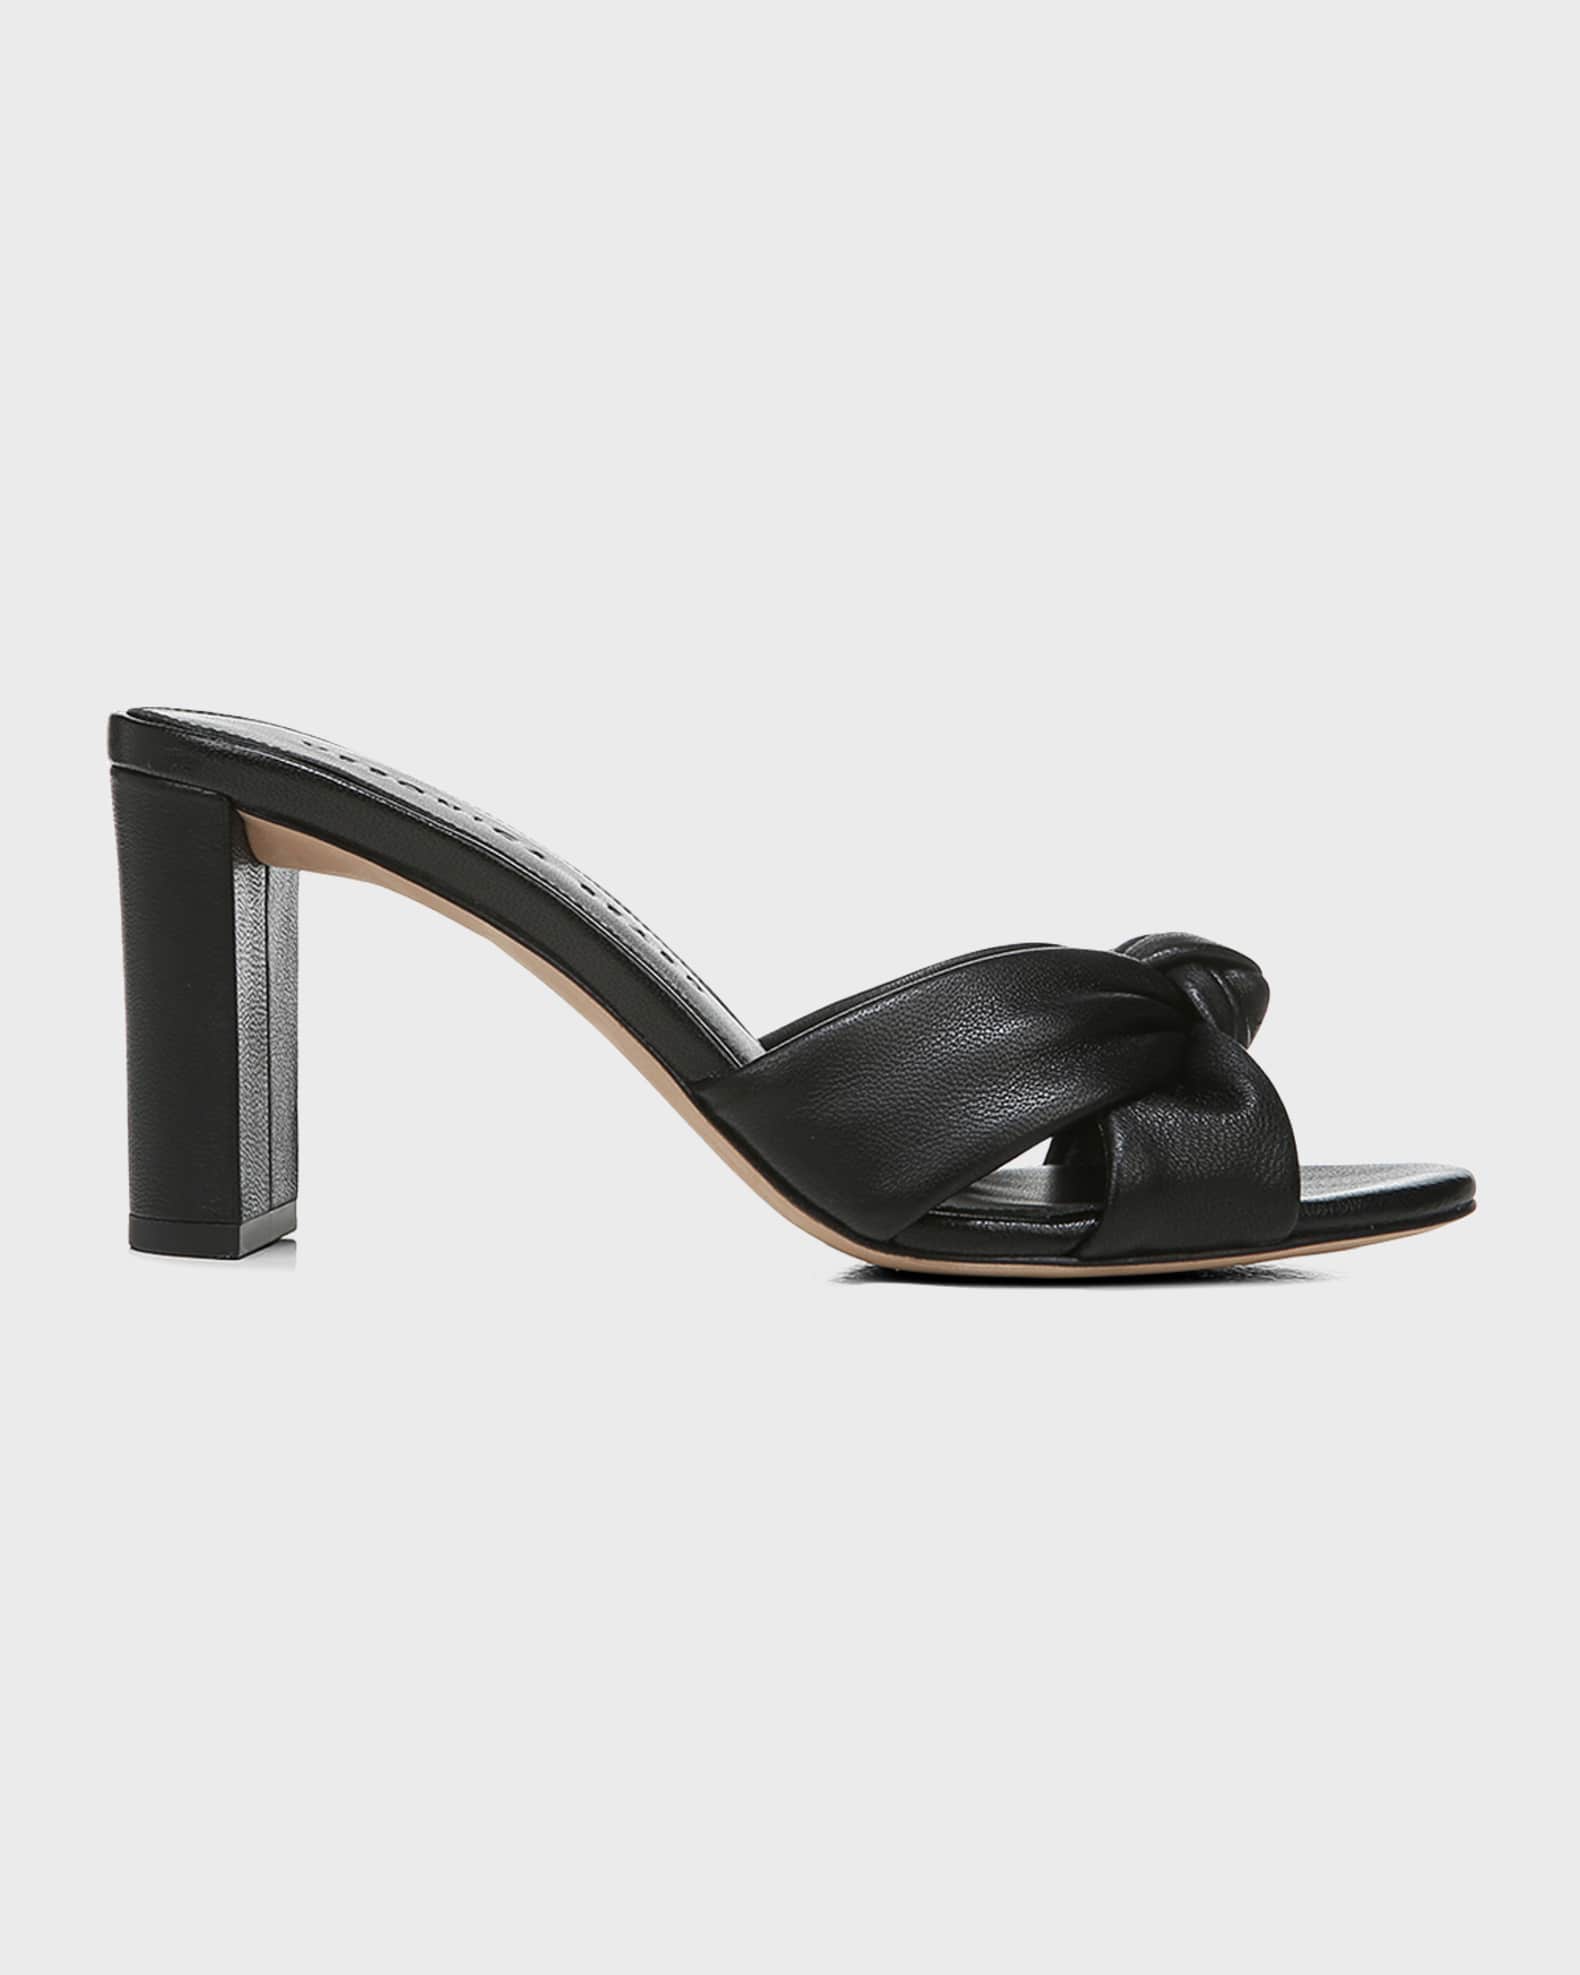 Veronica Beard Ganita Knotted Leather Sandals | Neiman Marcus